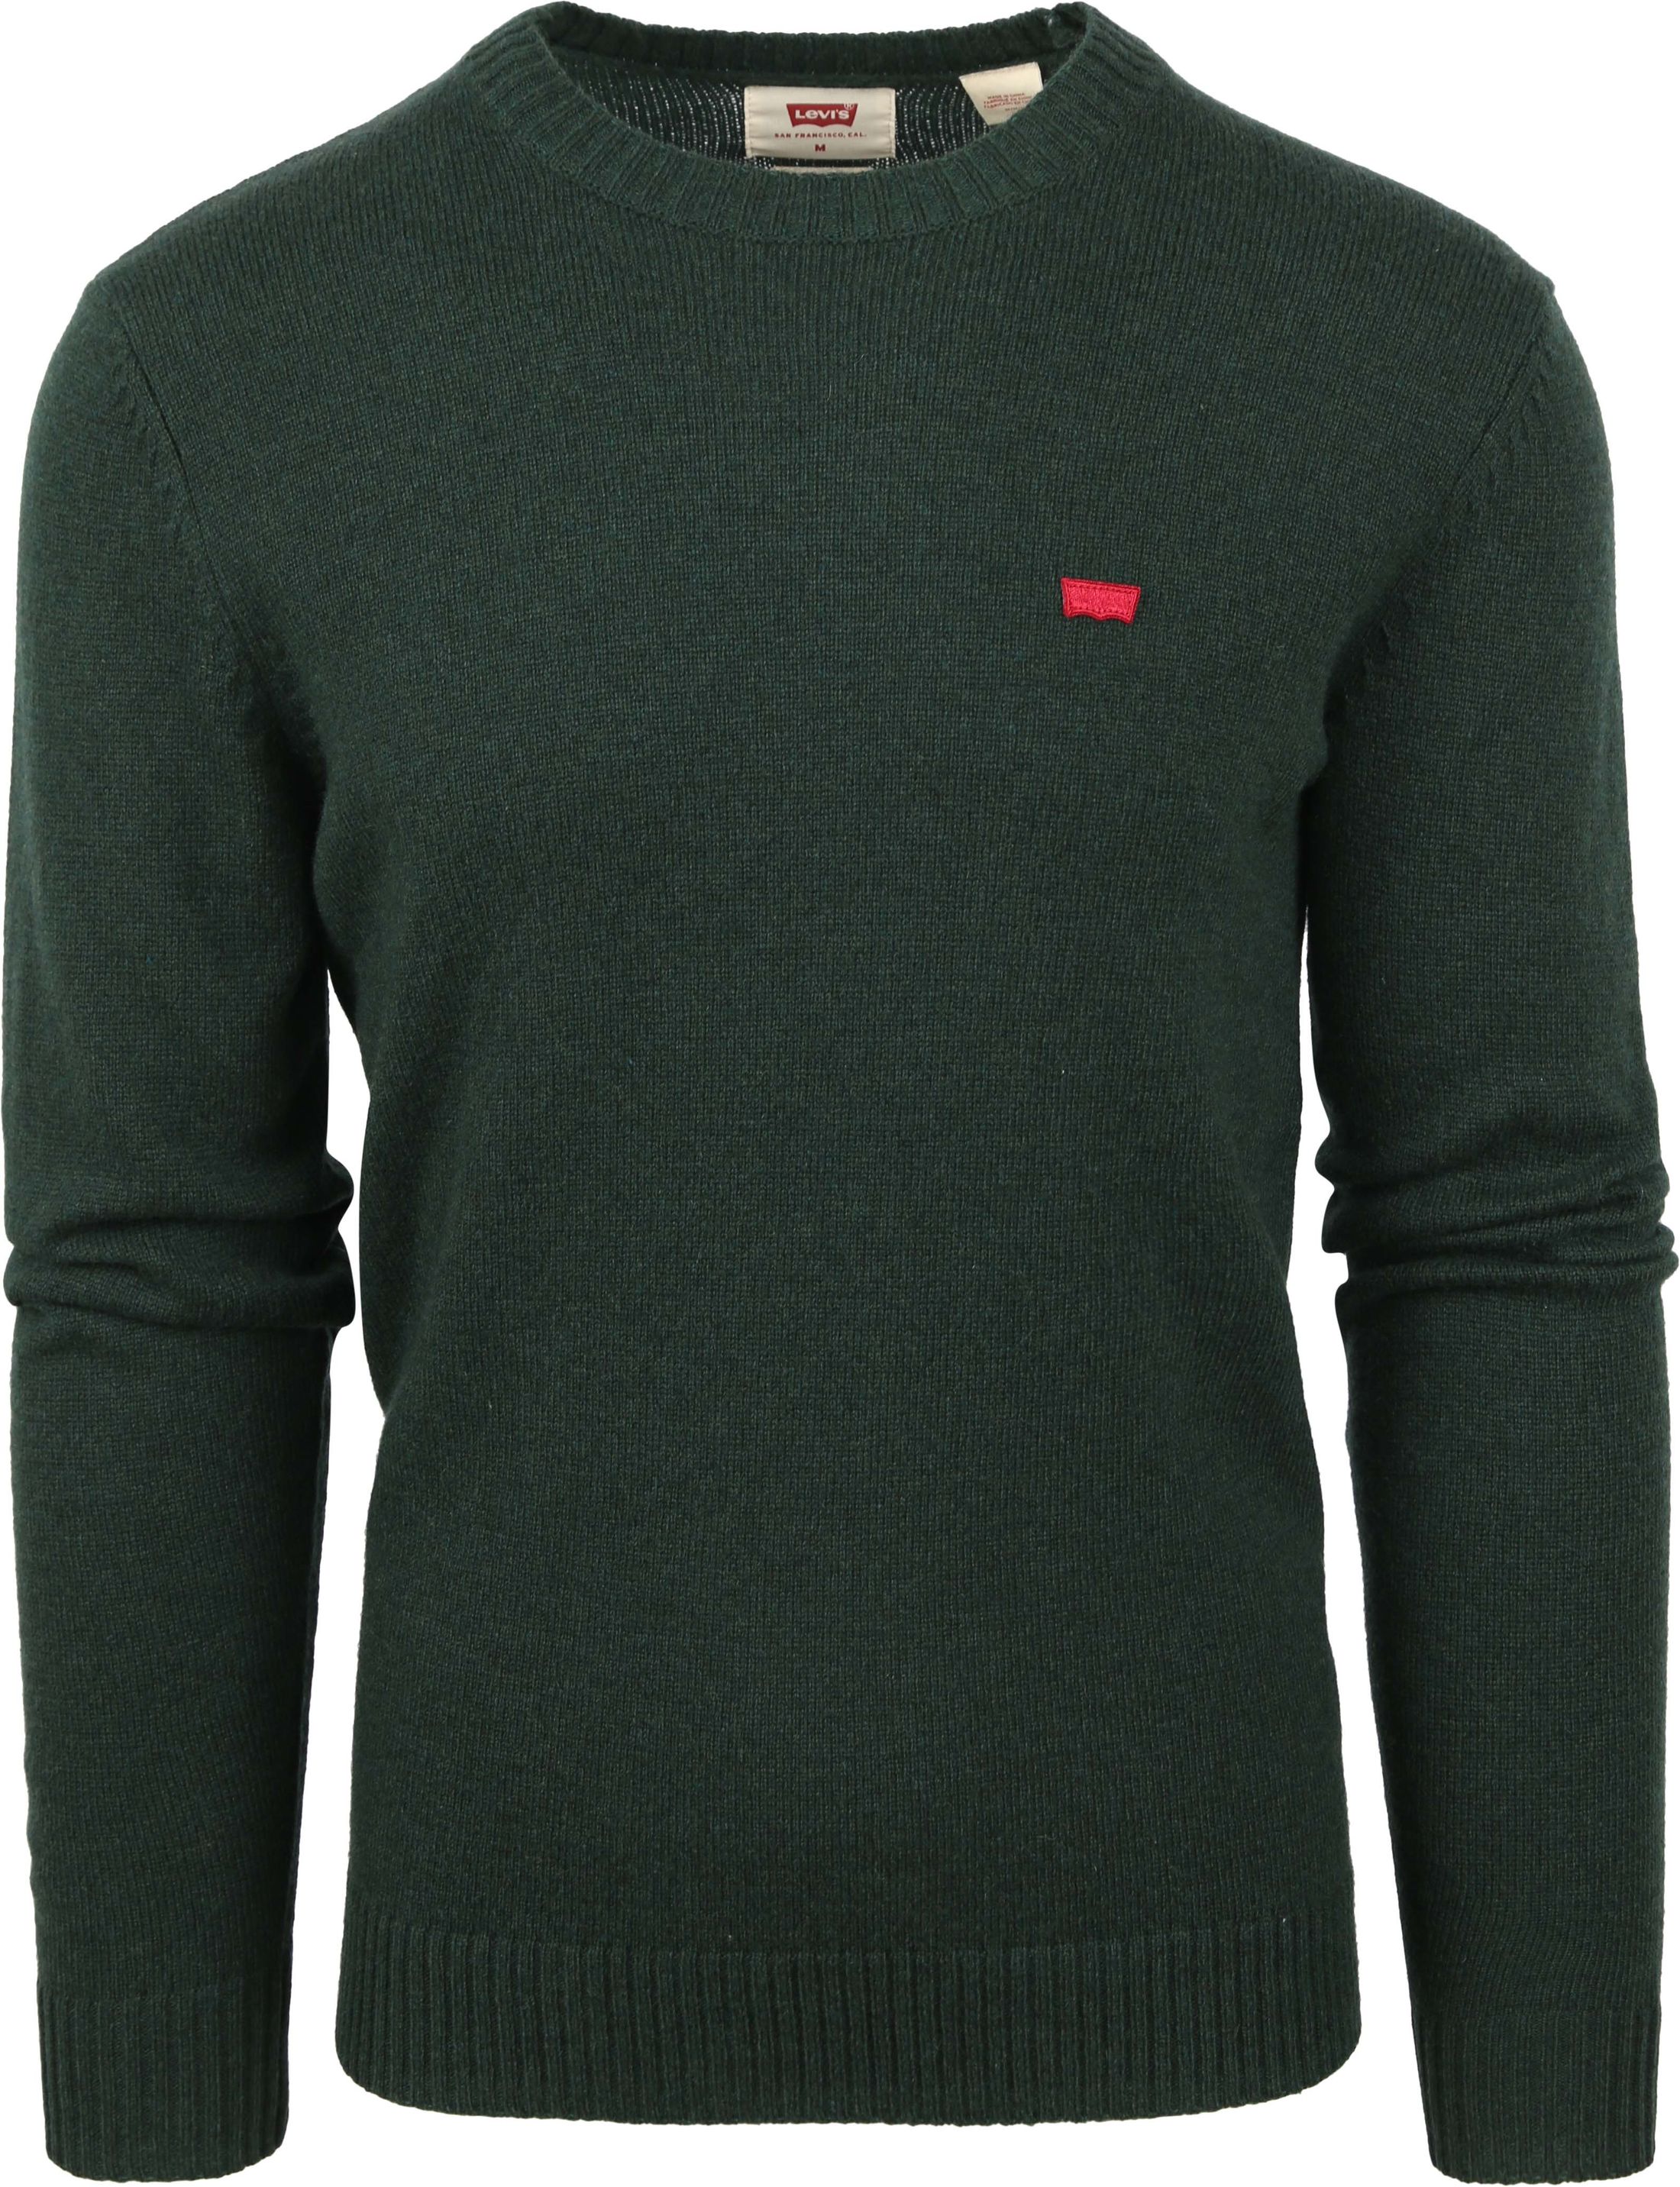 Levi's Original Sweater Wol Donkergroen Green Dark Green size XXL product